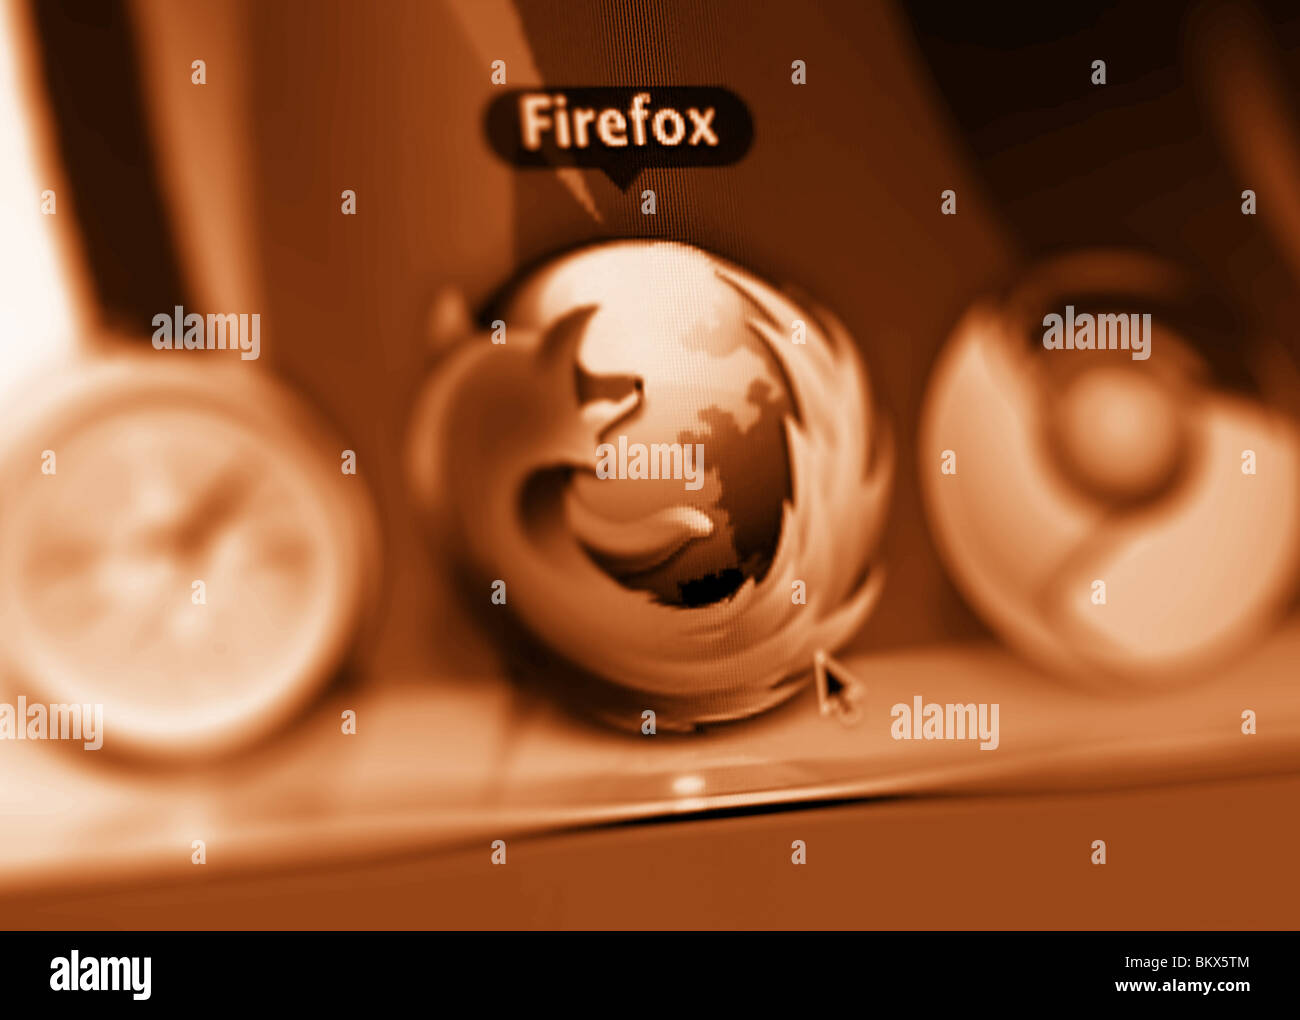 Foto Ilustrativa del navegador web Mozilla FireFox en el dock de un Macbook Foto de stock